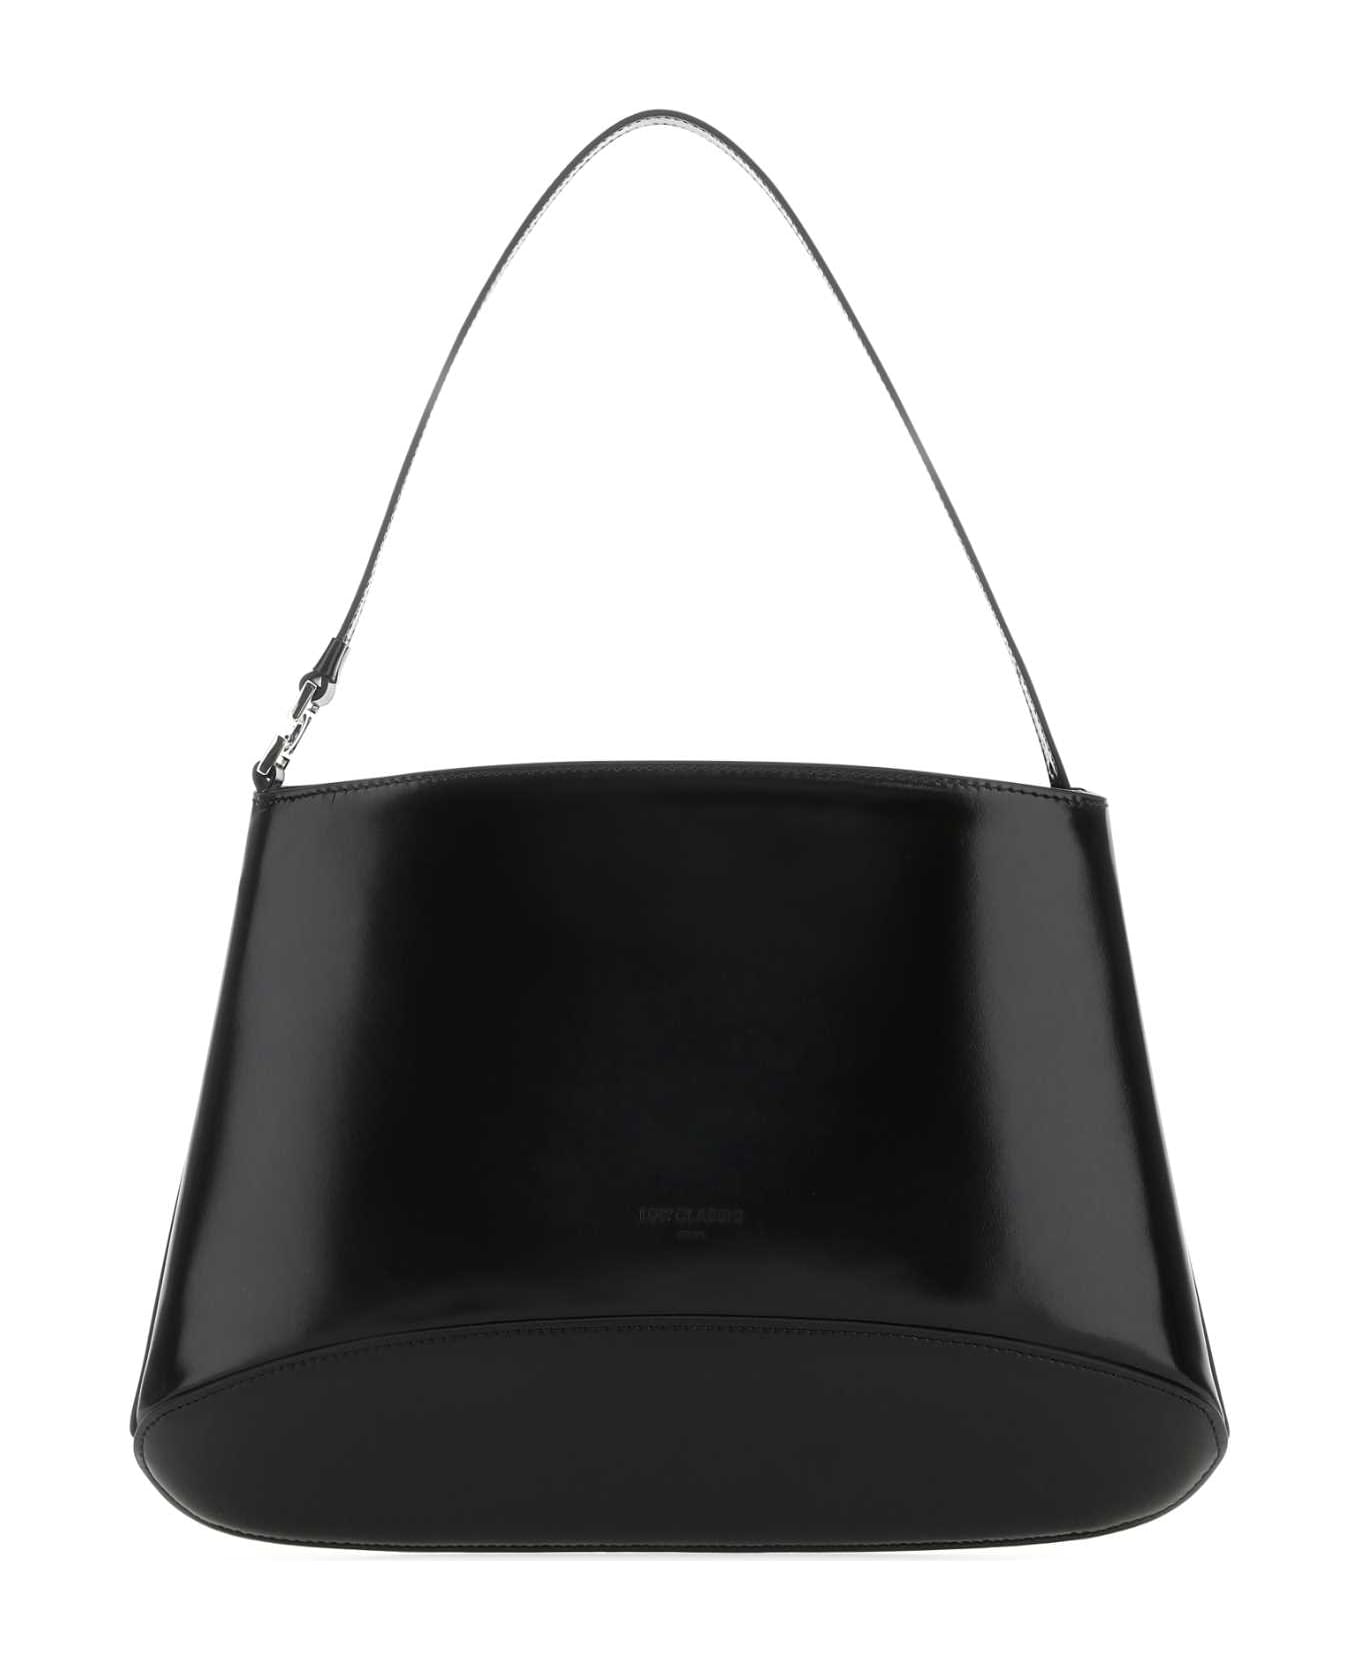 Low Classic Black Leather Handbag - 0372